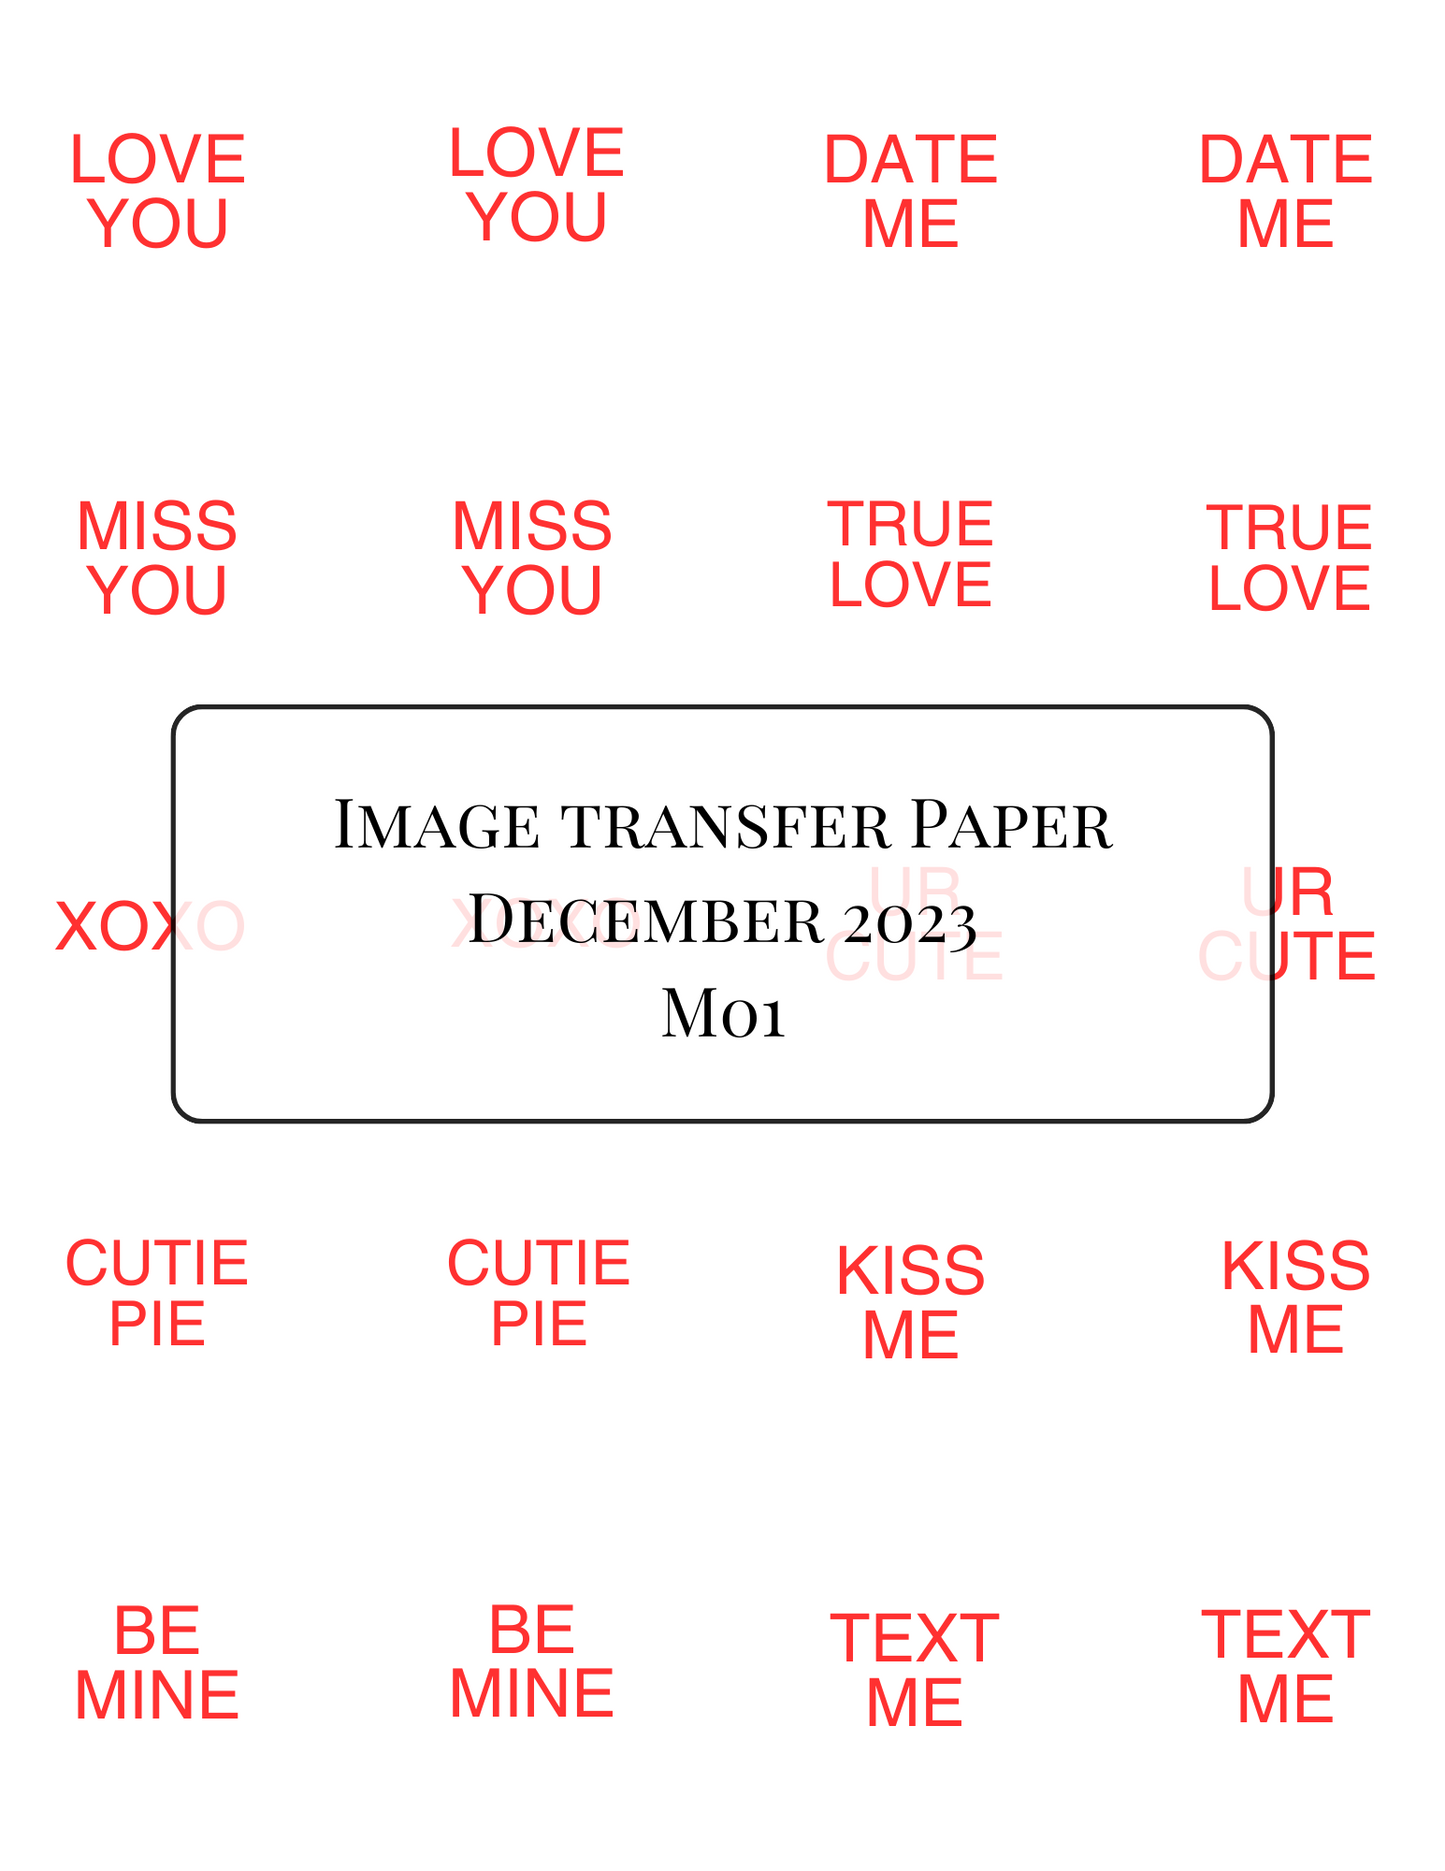 M01 Transfer Paper - December 2023 Launch